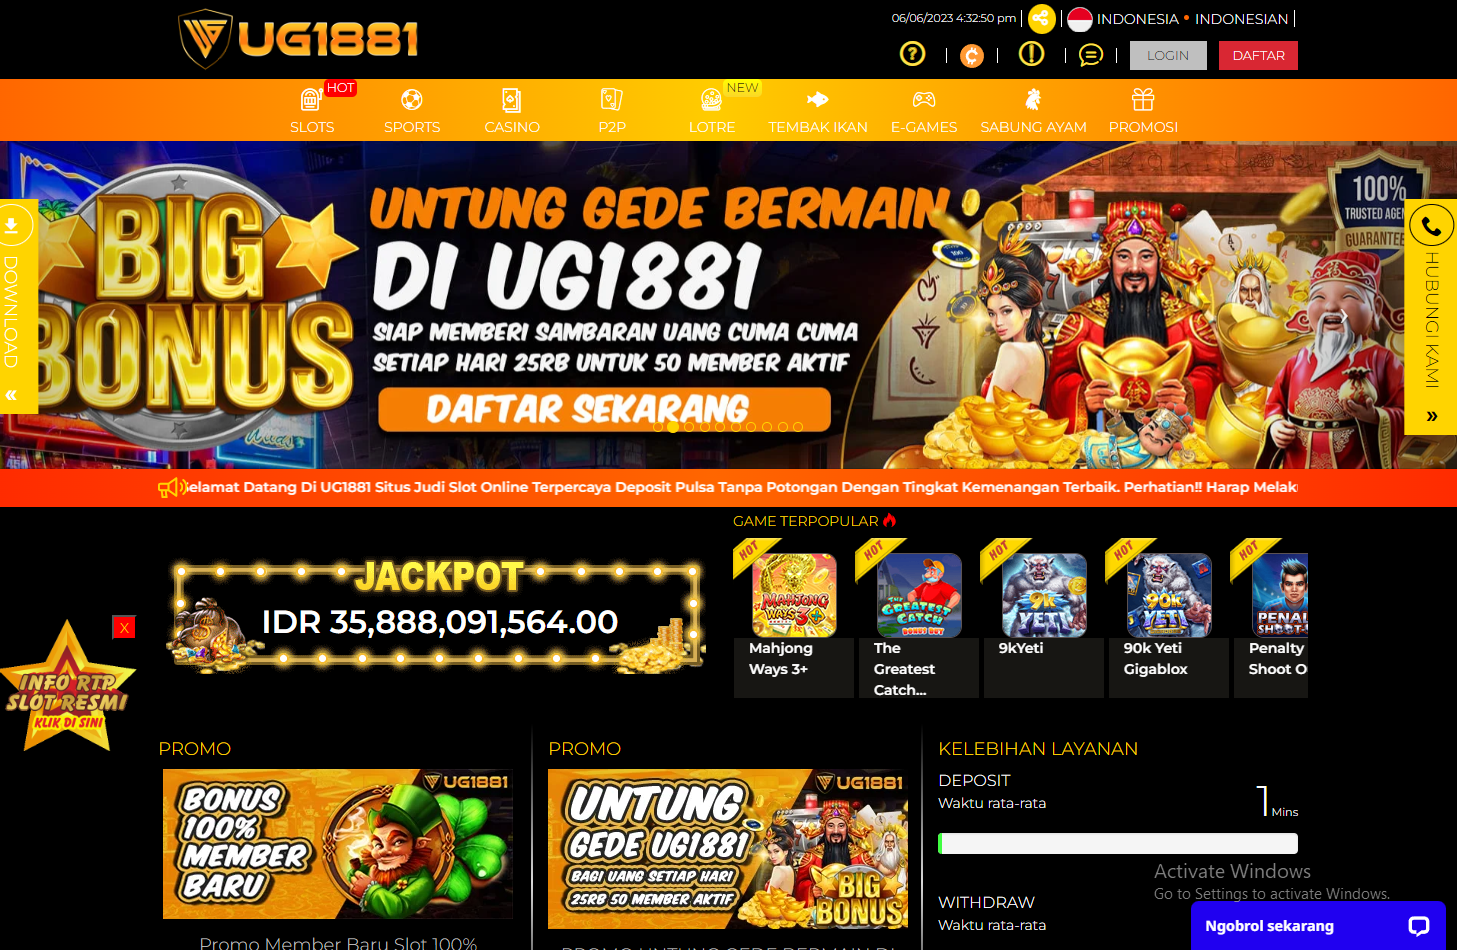 UG1881 Judi Slot Online Gacor Deposit Pulsa Tanpa Potongan